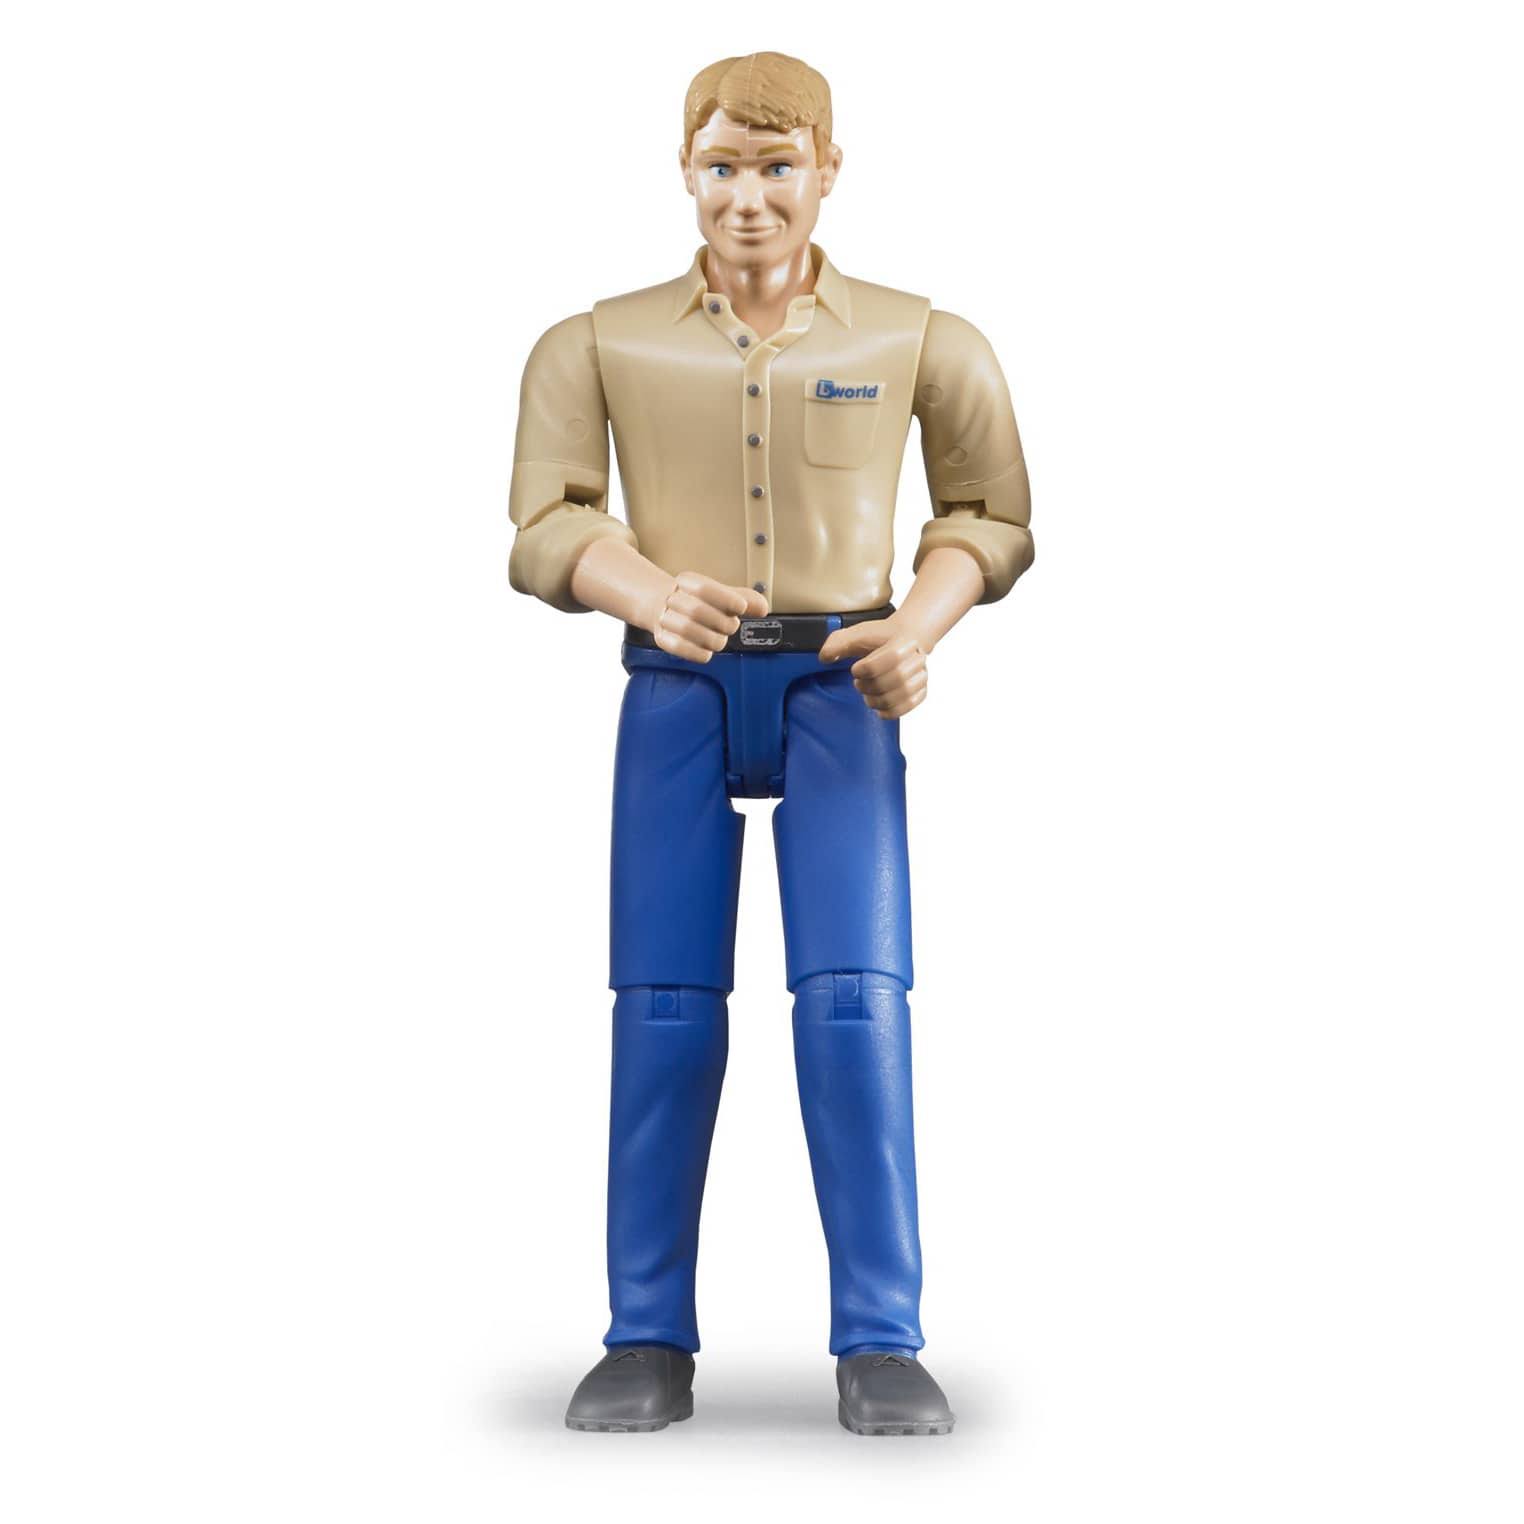 Bruder Man with Light Skin & Blue Jeans Toy Figure